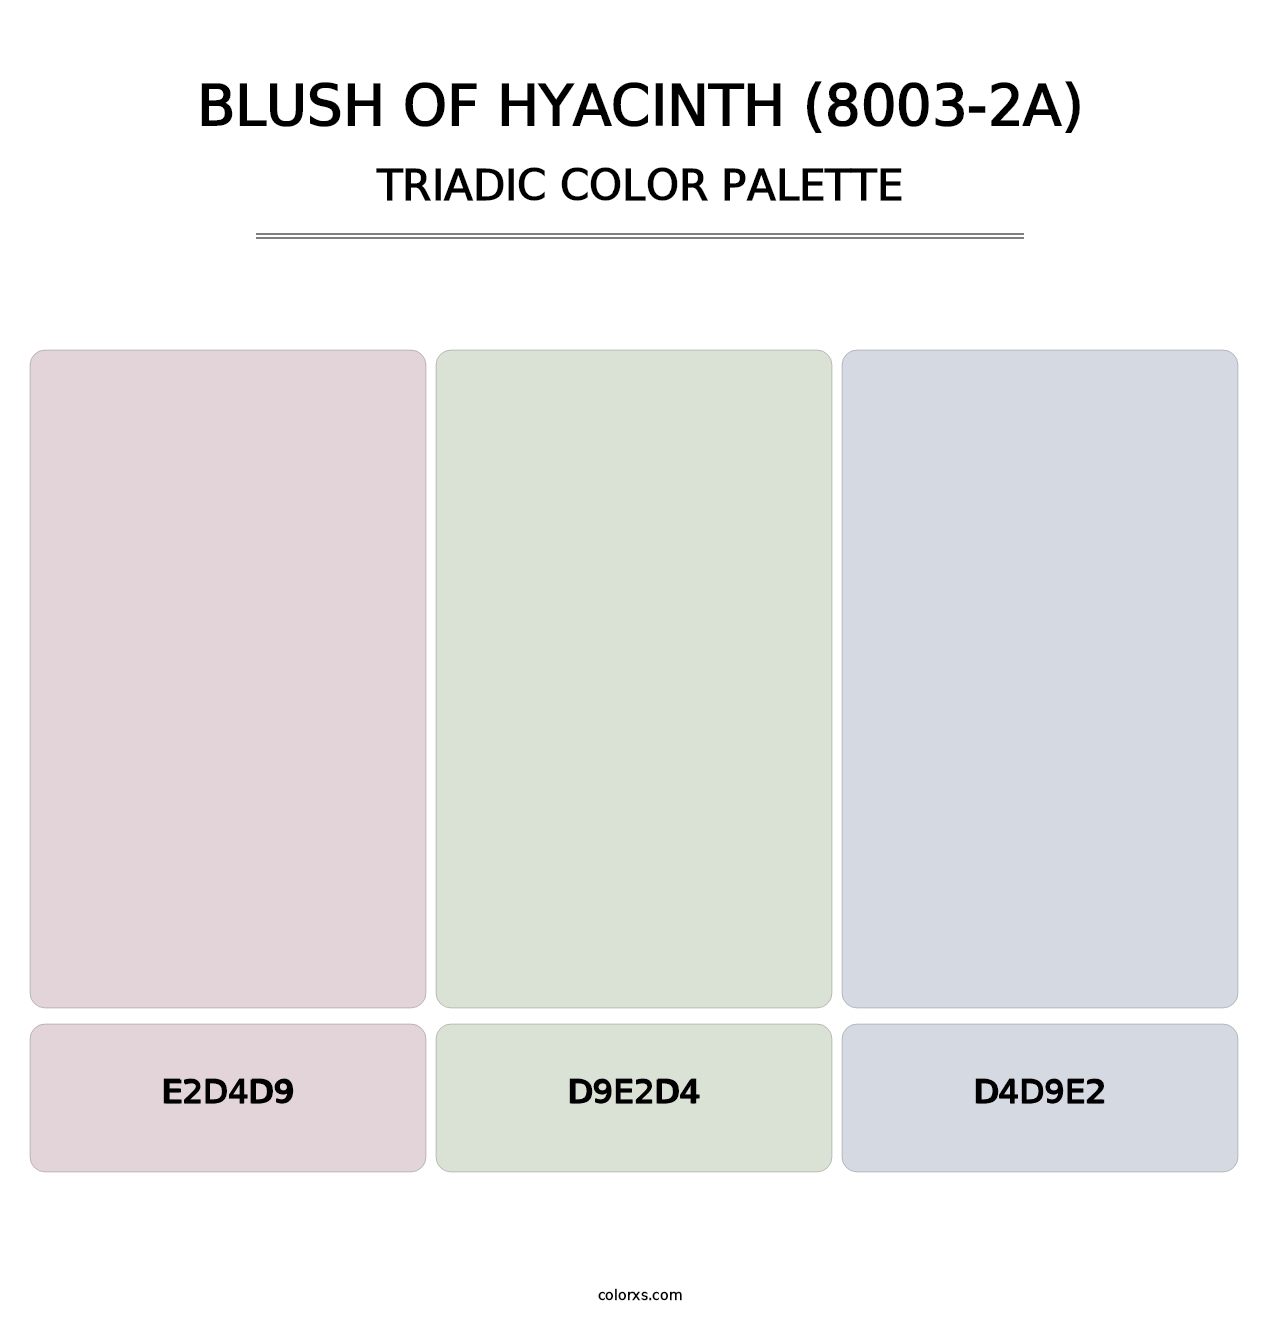 Blush of Hyacinth (8003-2A) - Triadic Color Palette